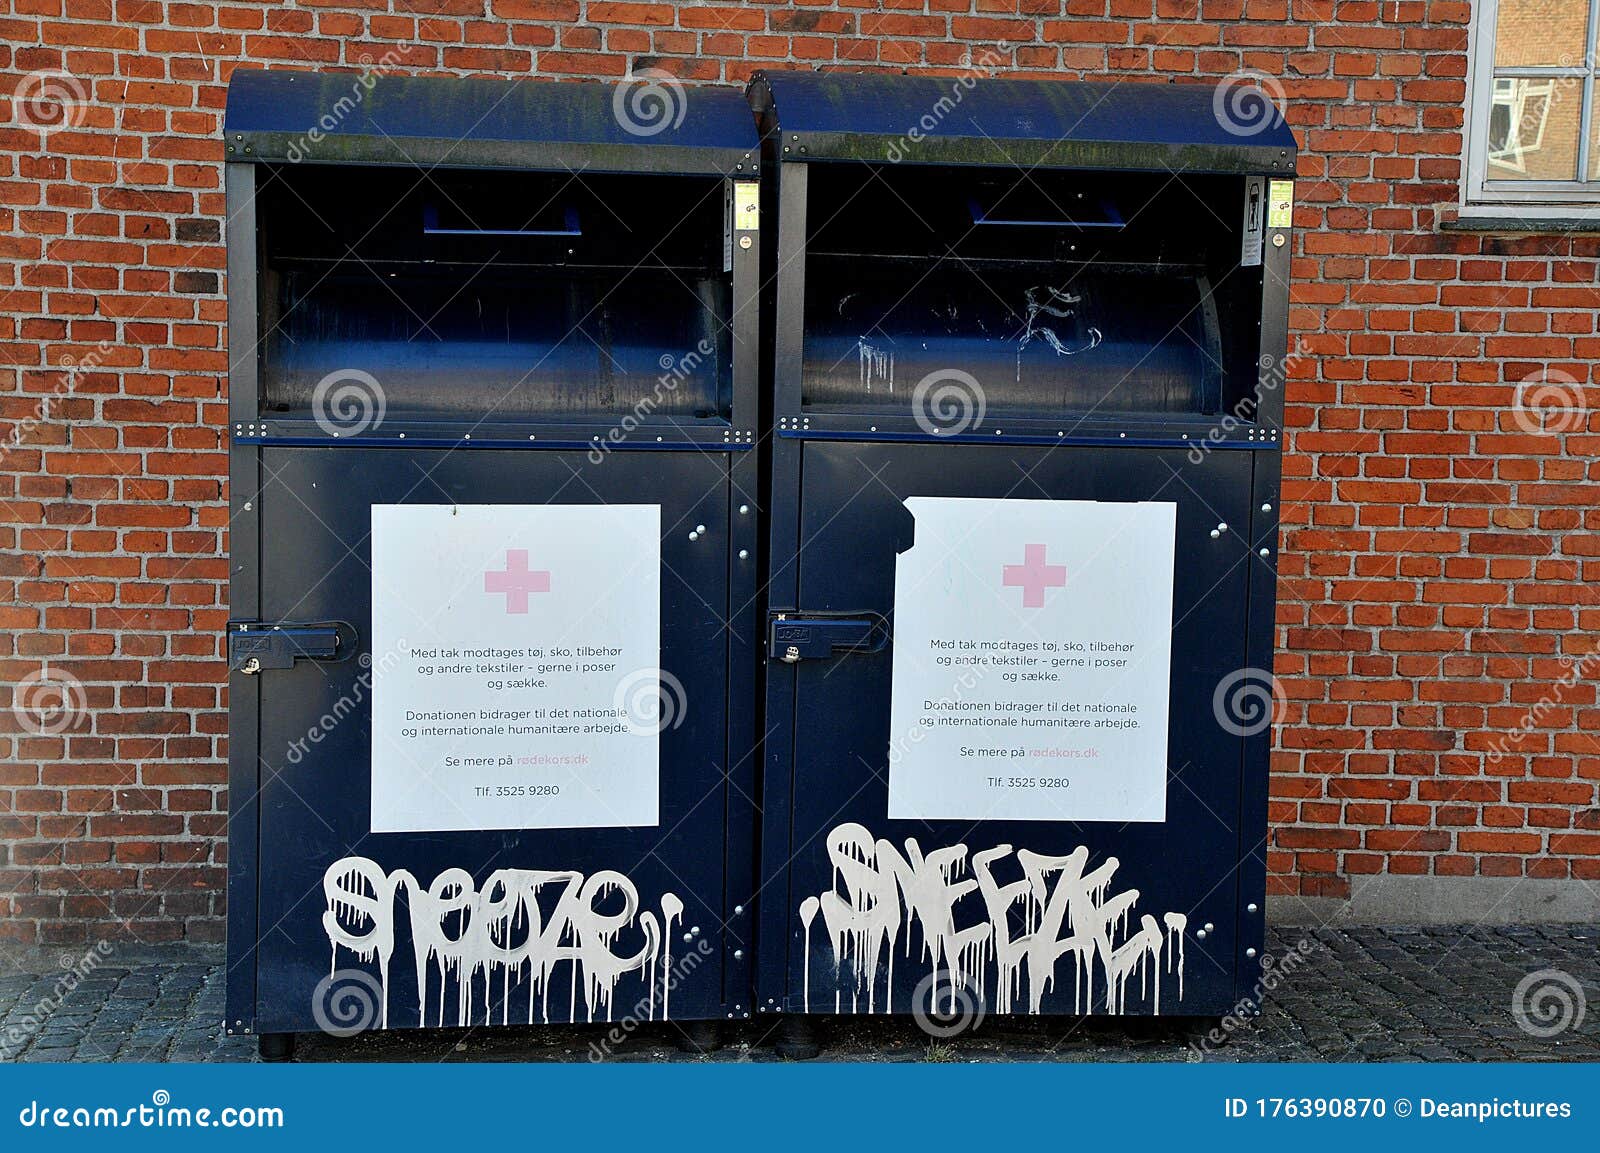 Danish Red Cross Old Cloths Containers Copenhagen Editorial - Image of danmark, doantions: 176390870